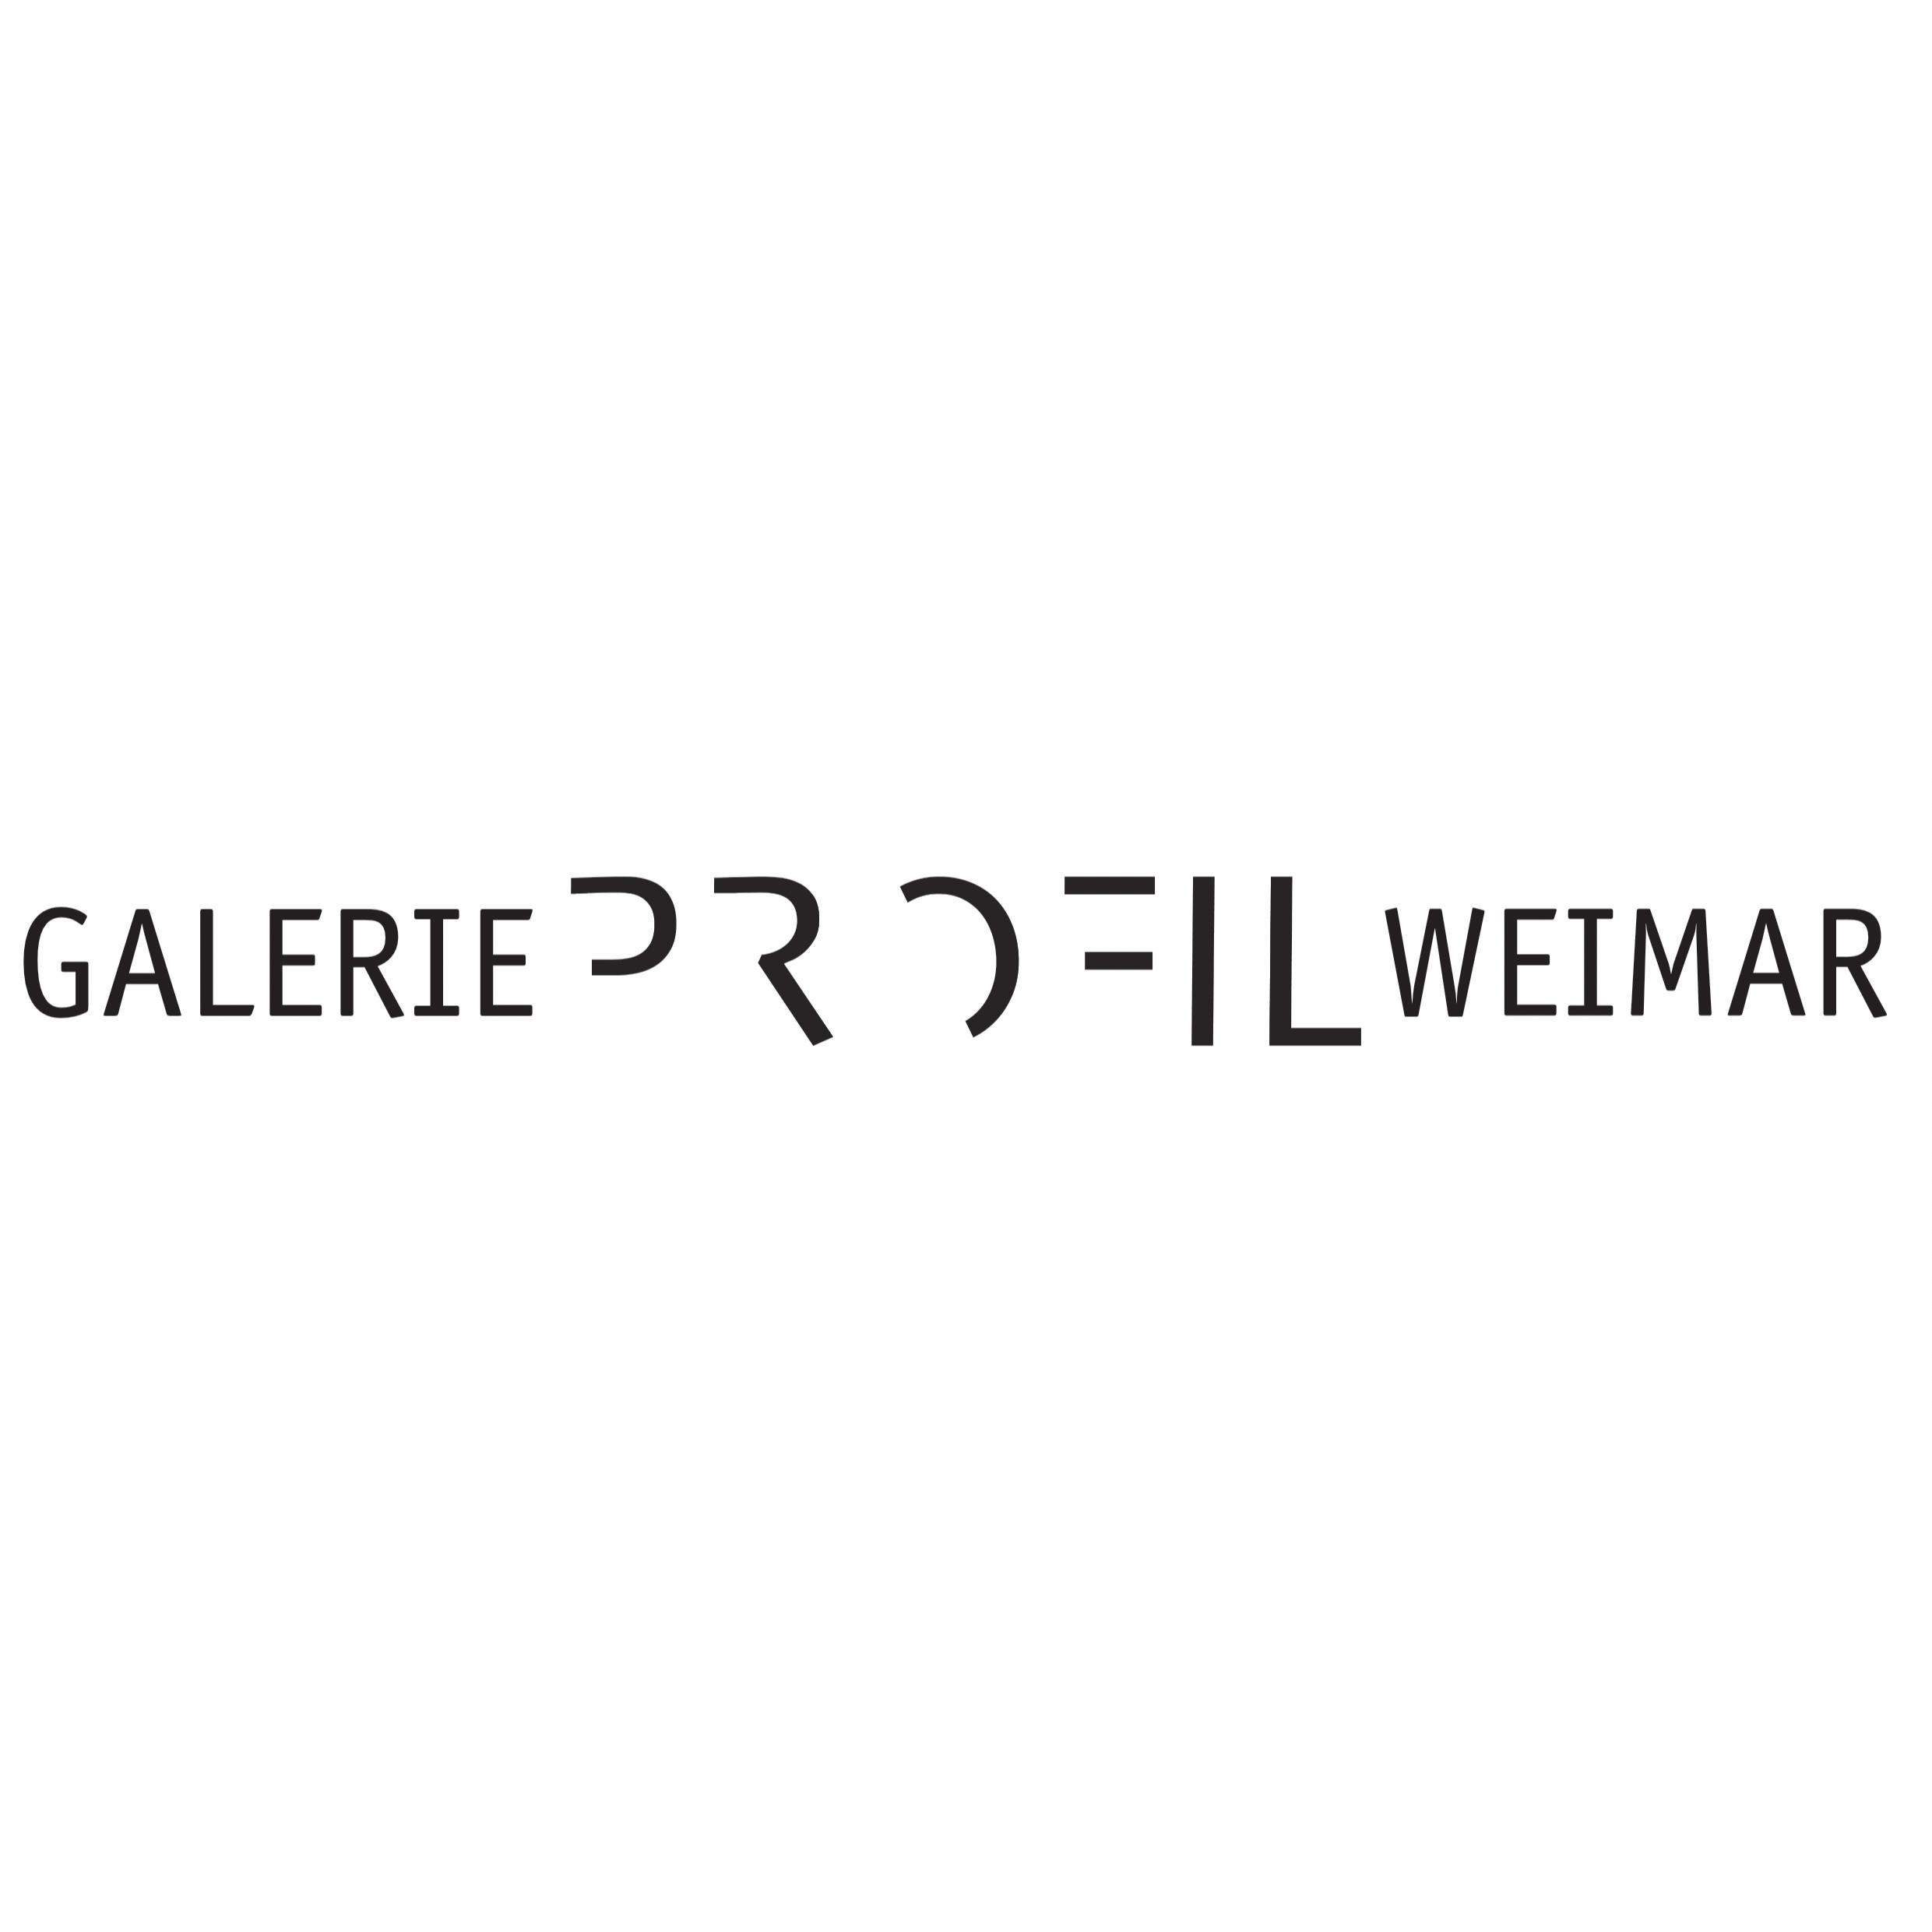 Galerie Profil Weimar Logo